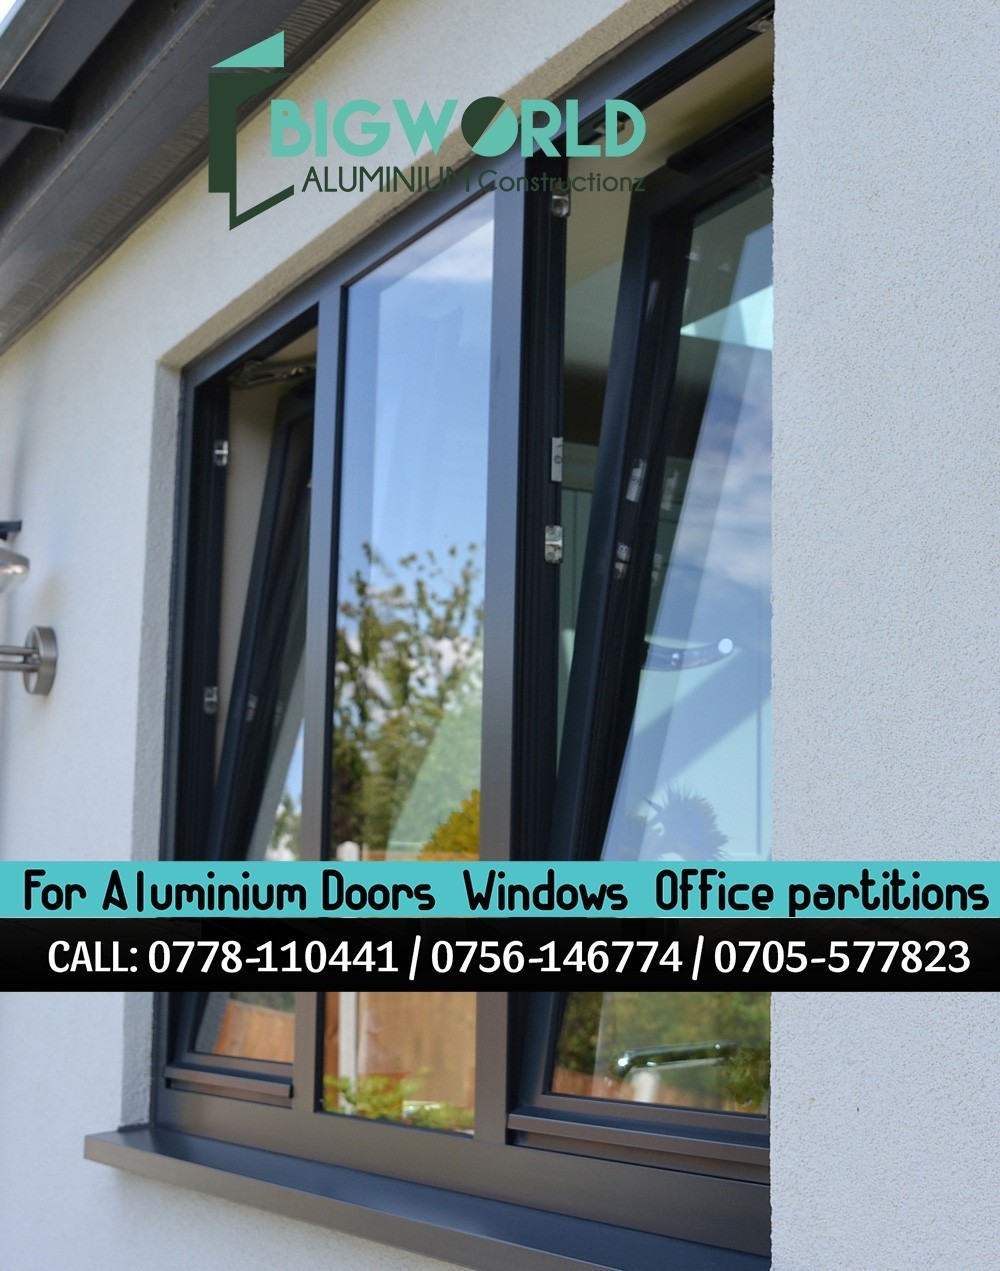 256778110441 Best Aluminium Windows and Doors Company in Uganda